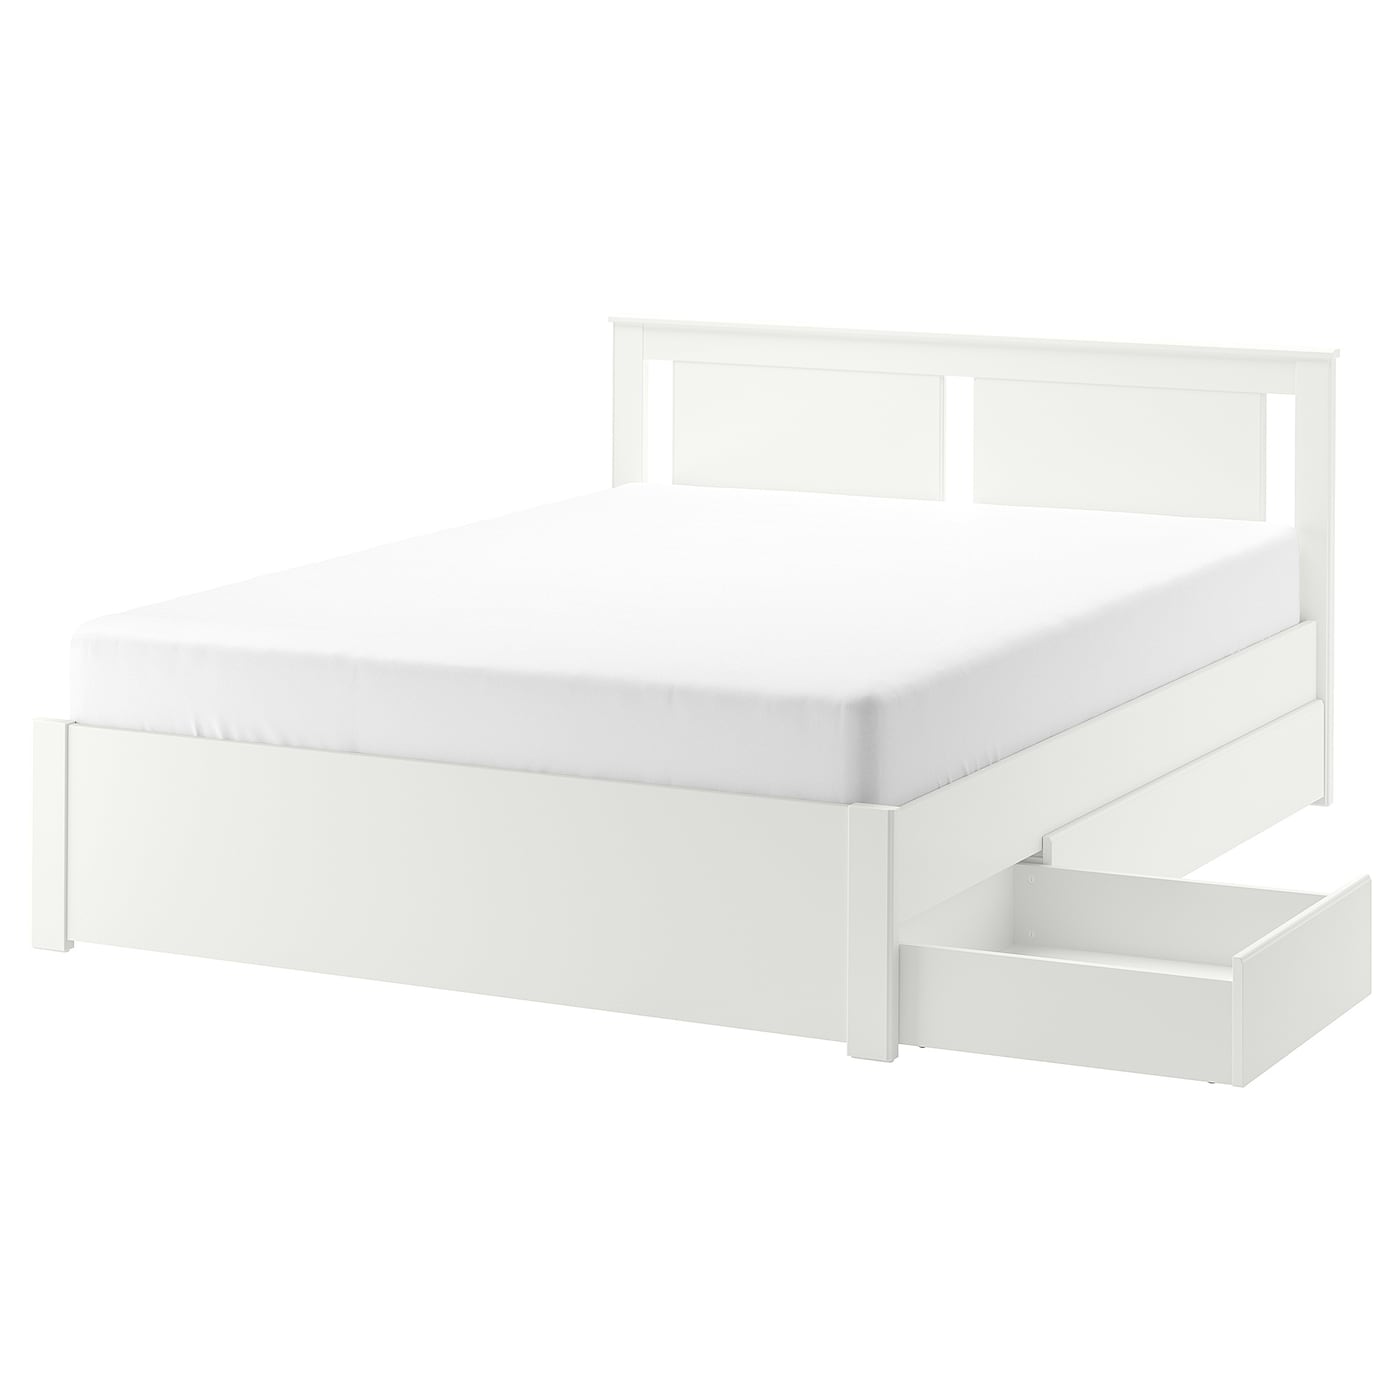 Каркас кровати с 4 ящиками для хранения - IKEA SONGESAND/LURÖY/LUROY, 200х160 см, белый, СОНГЕСАНД/ЛУРОЙ ИКЕА